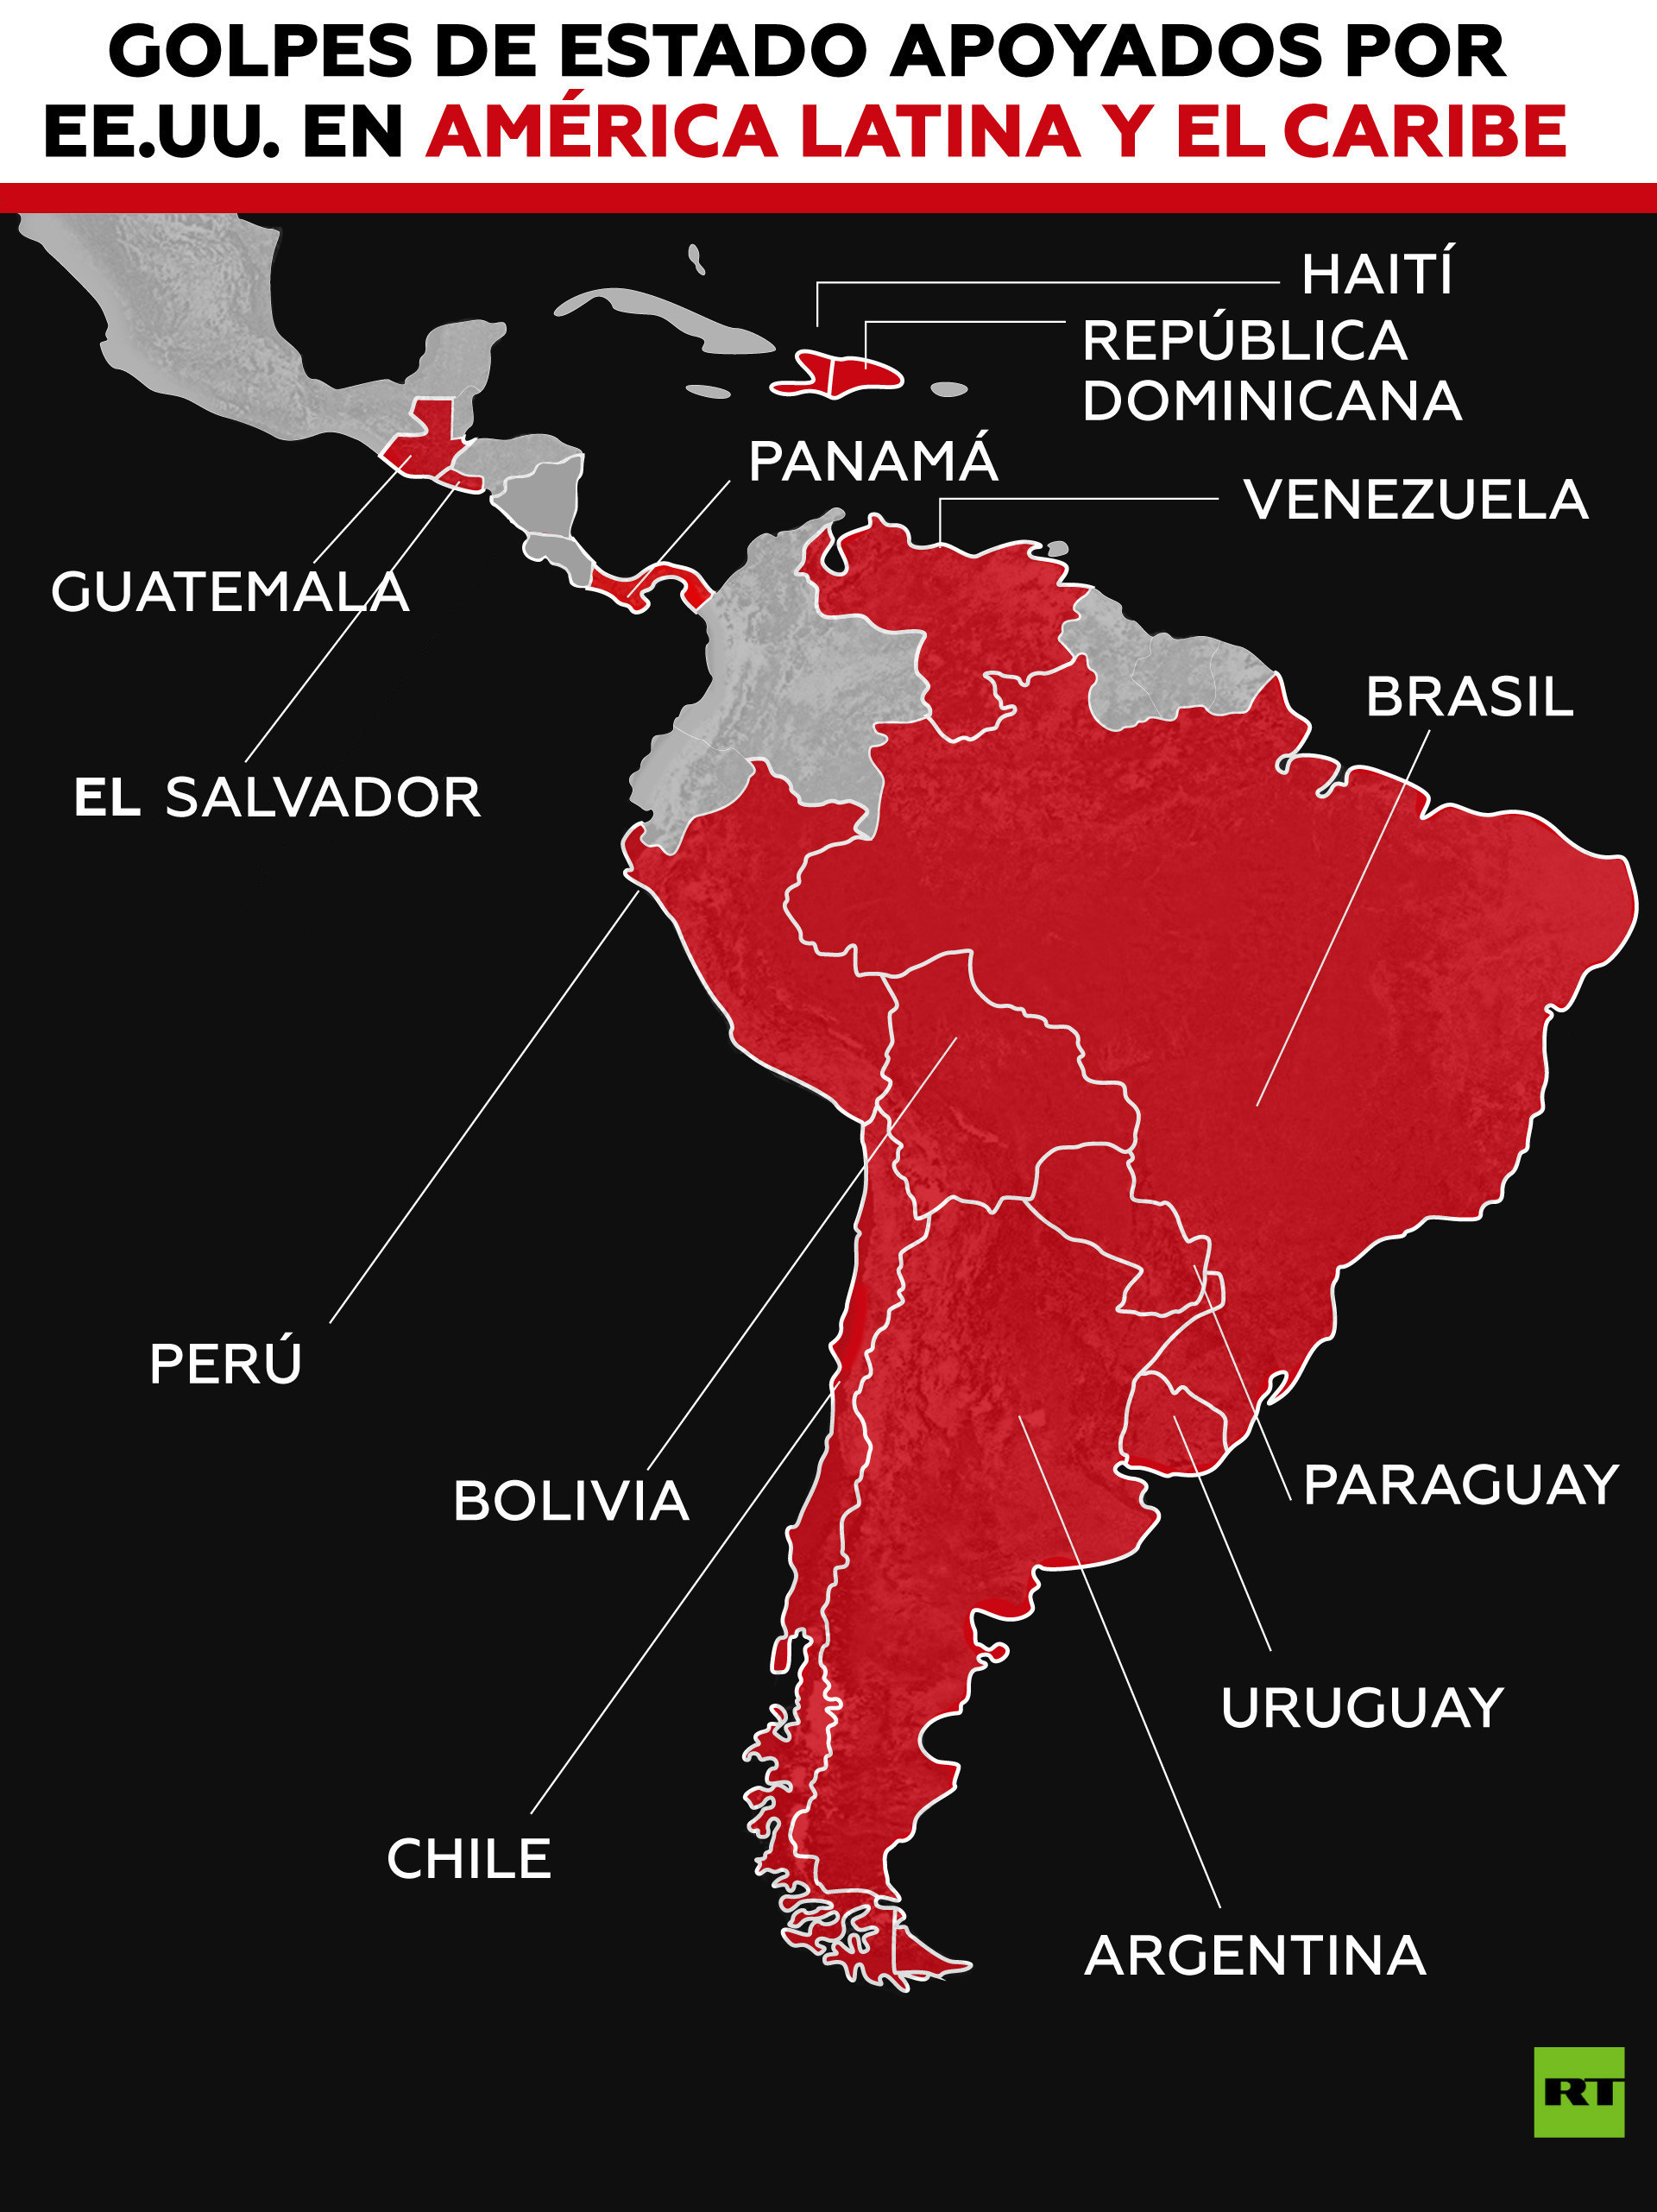 WikiLeaks: La estrategia de EE.UU. para Sudamérica contempla "golpes de Estado o magnicidios" 5c6ef41108f3d93d228b4567